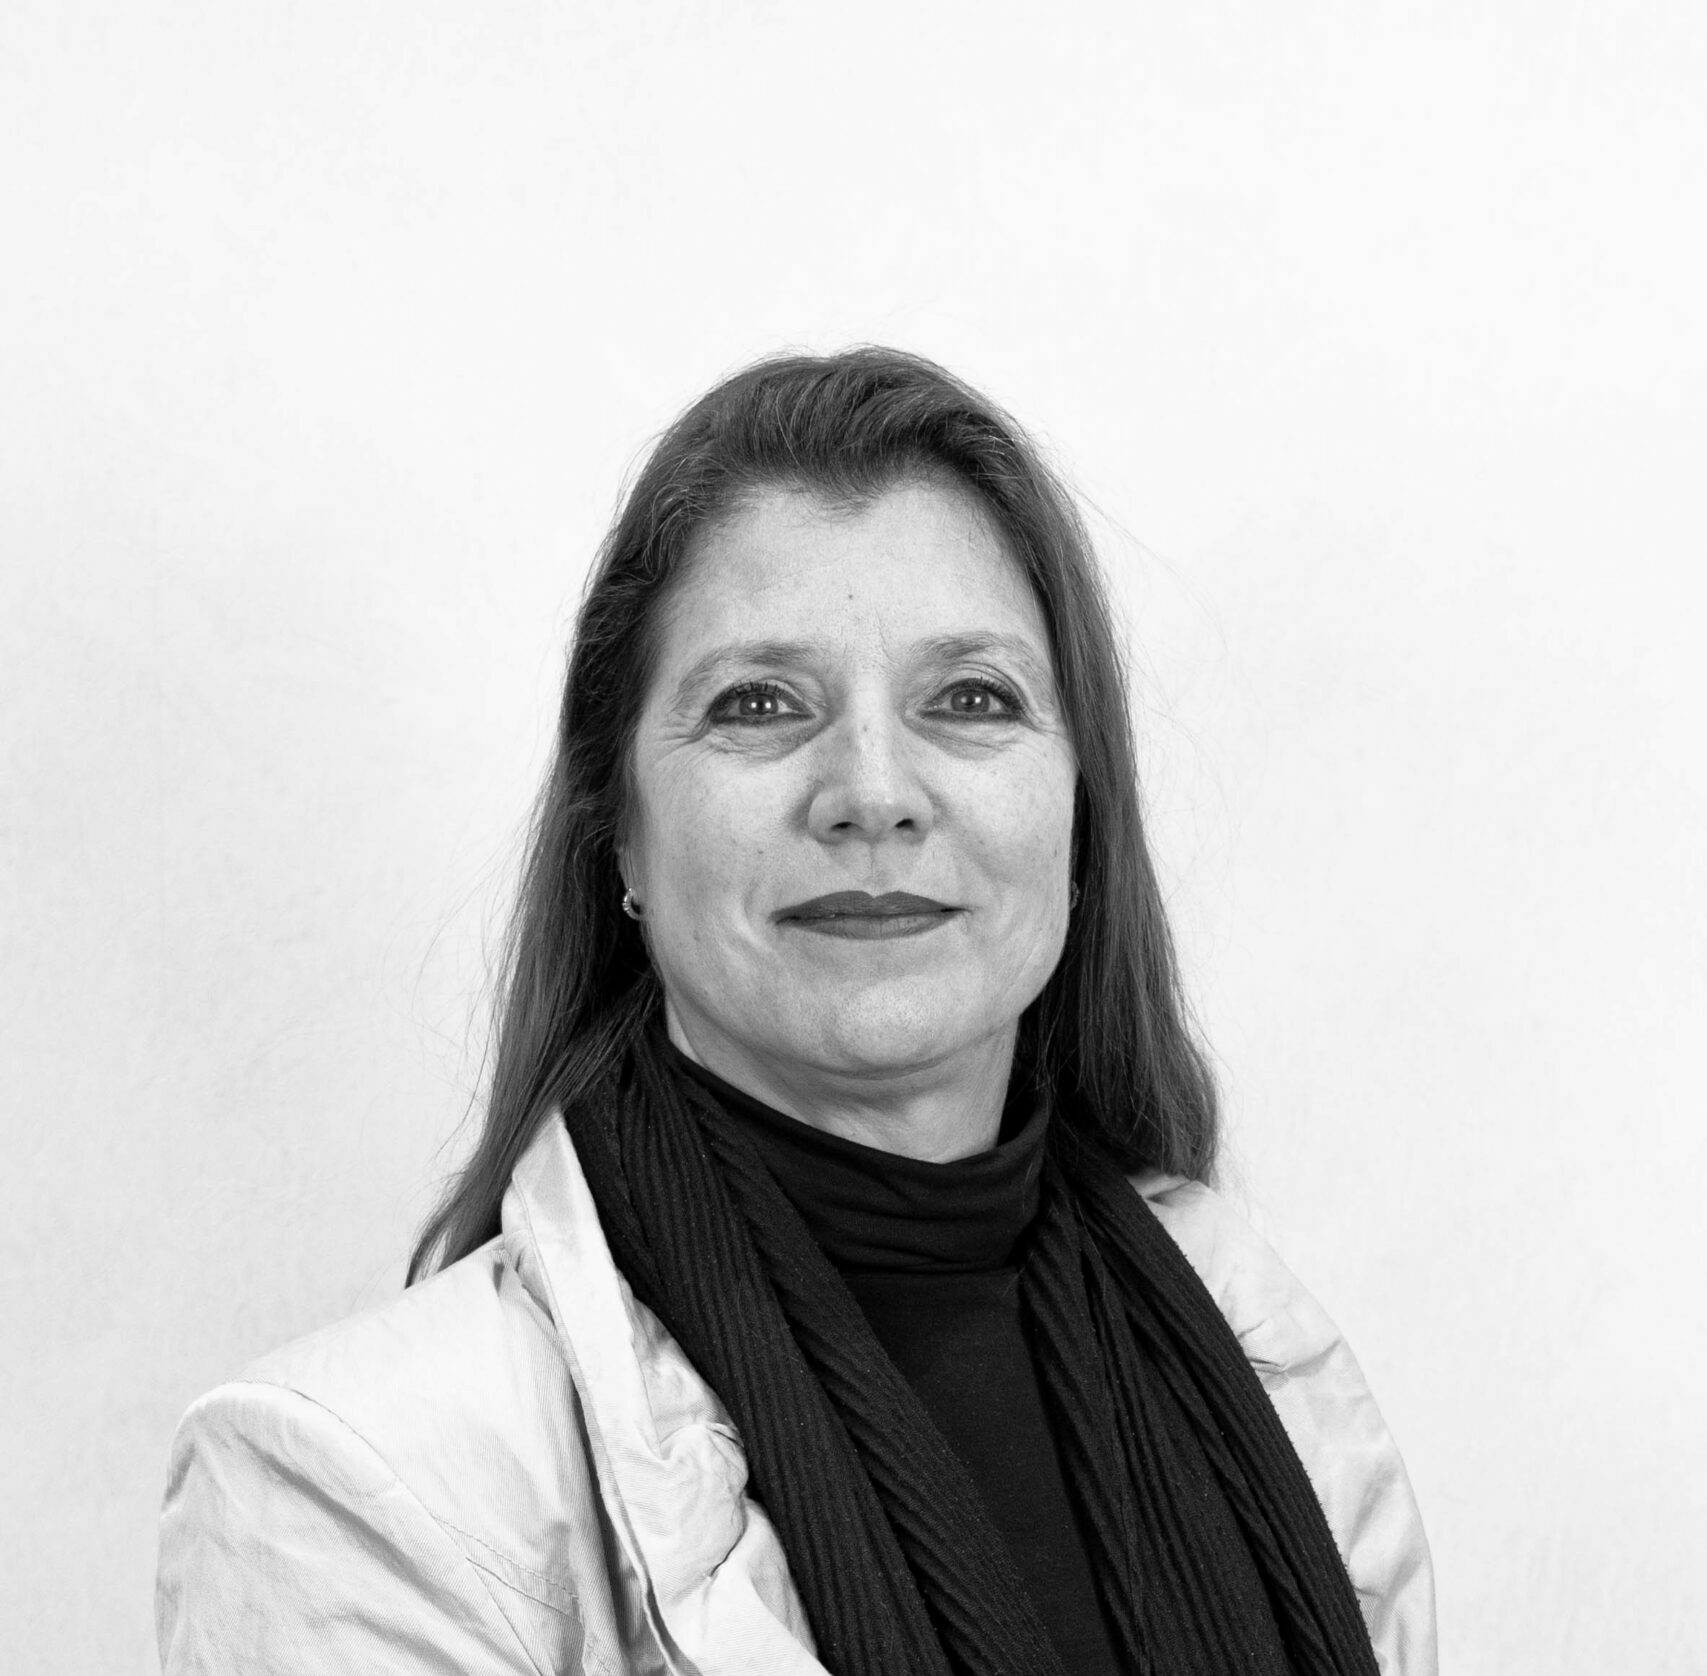 Patricia van der Weijden